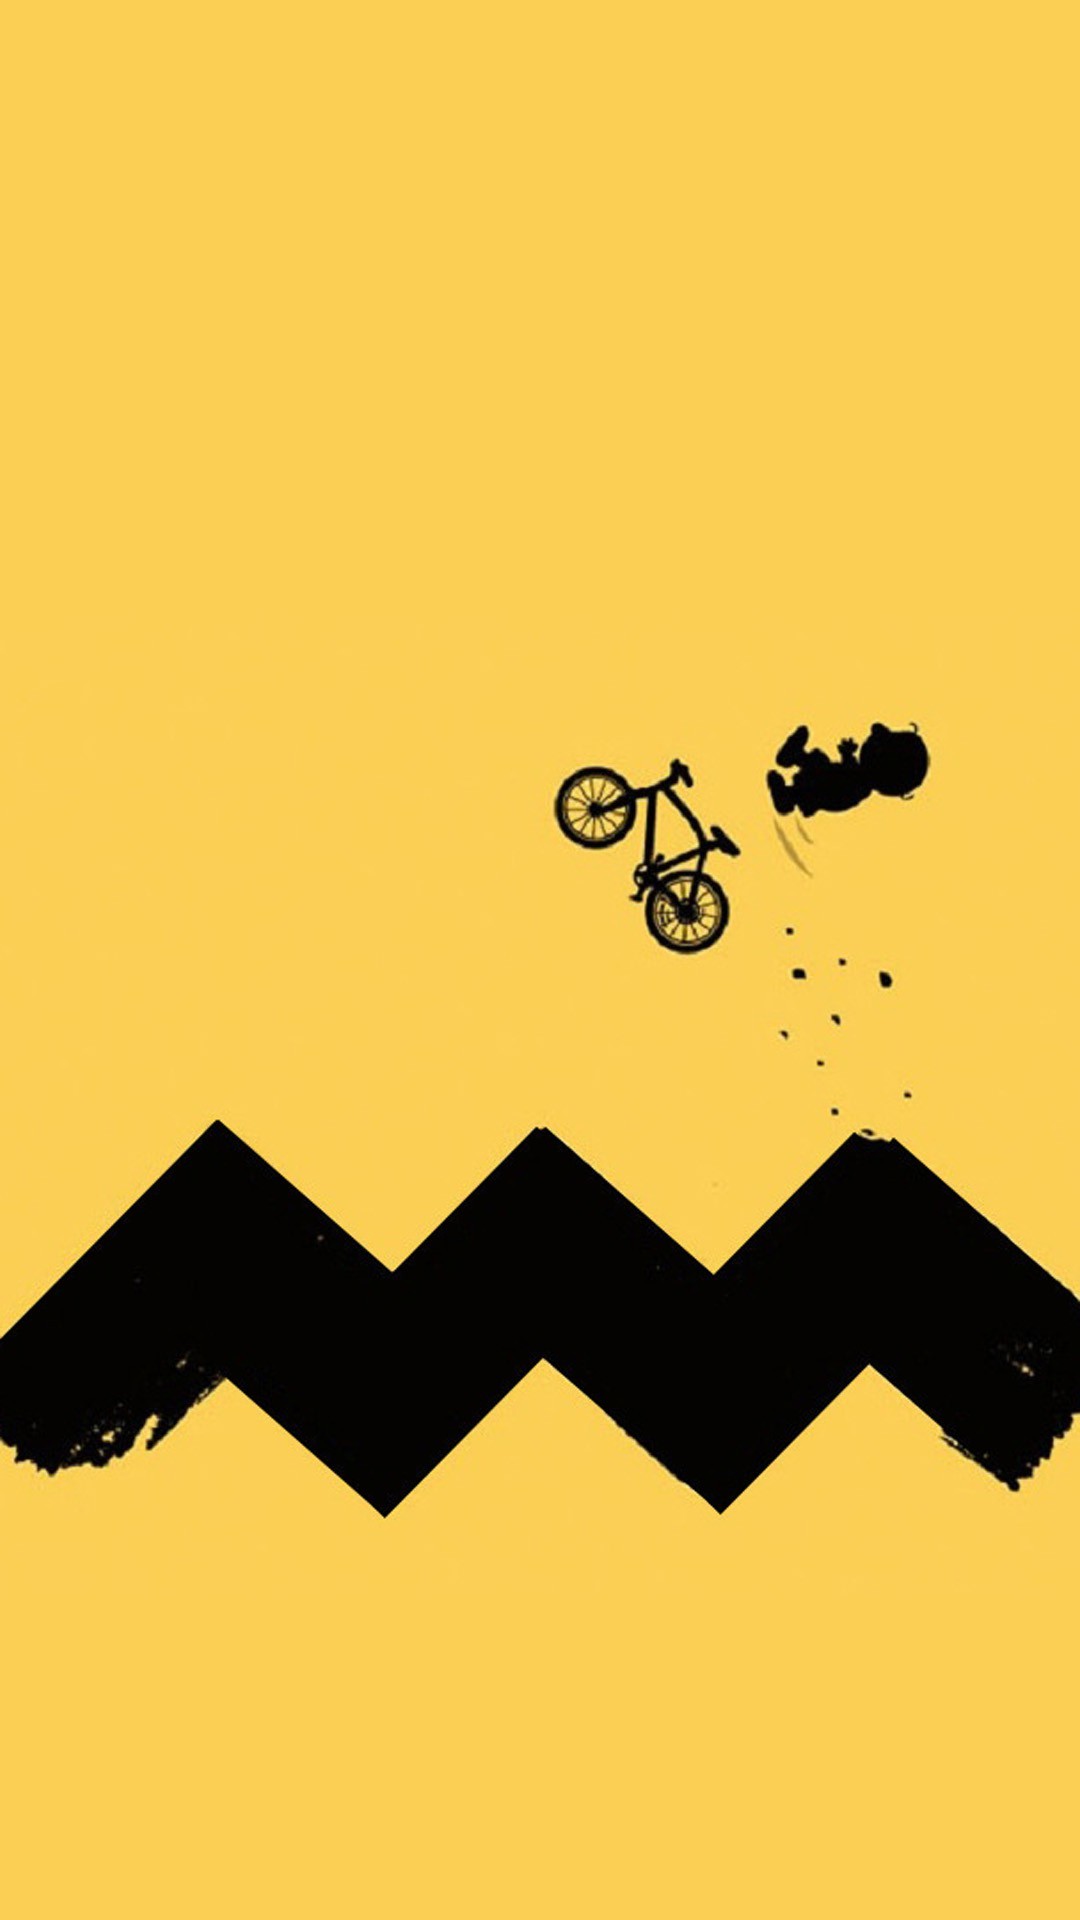 1080x1920 Cycling boy cartoon iPhone 7 wallpaper .